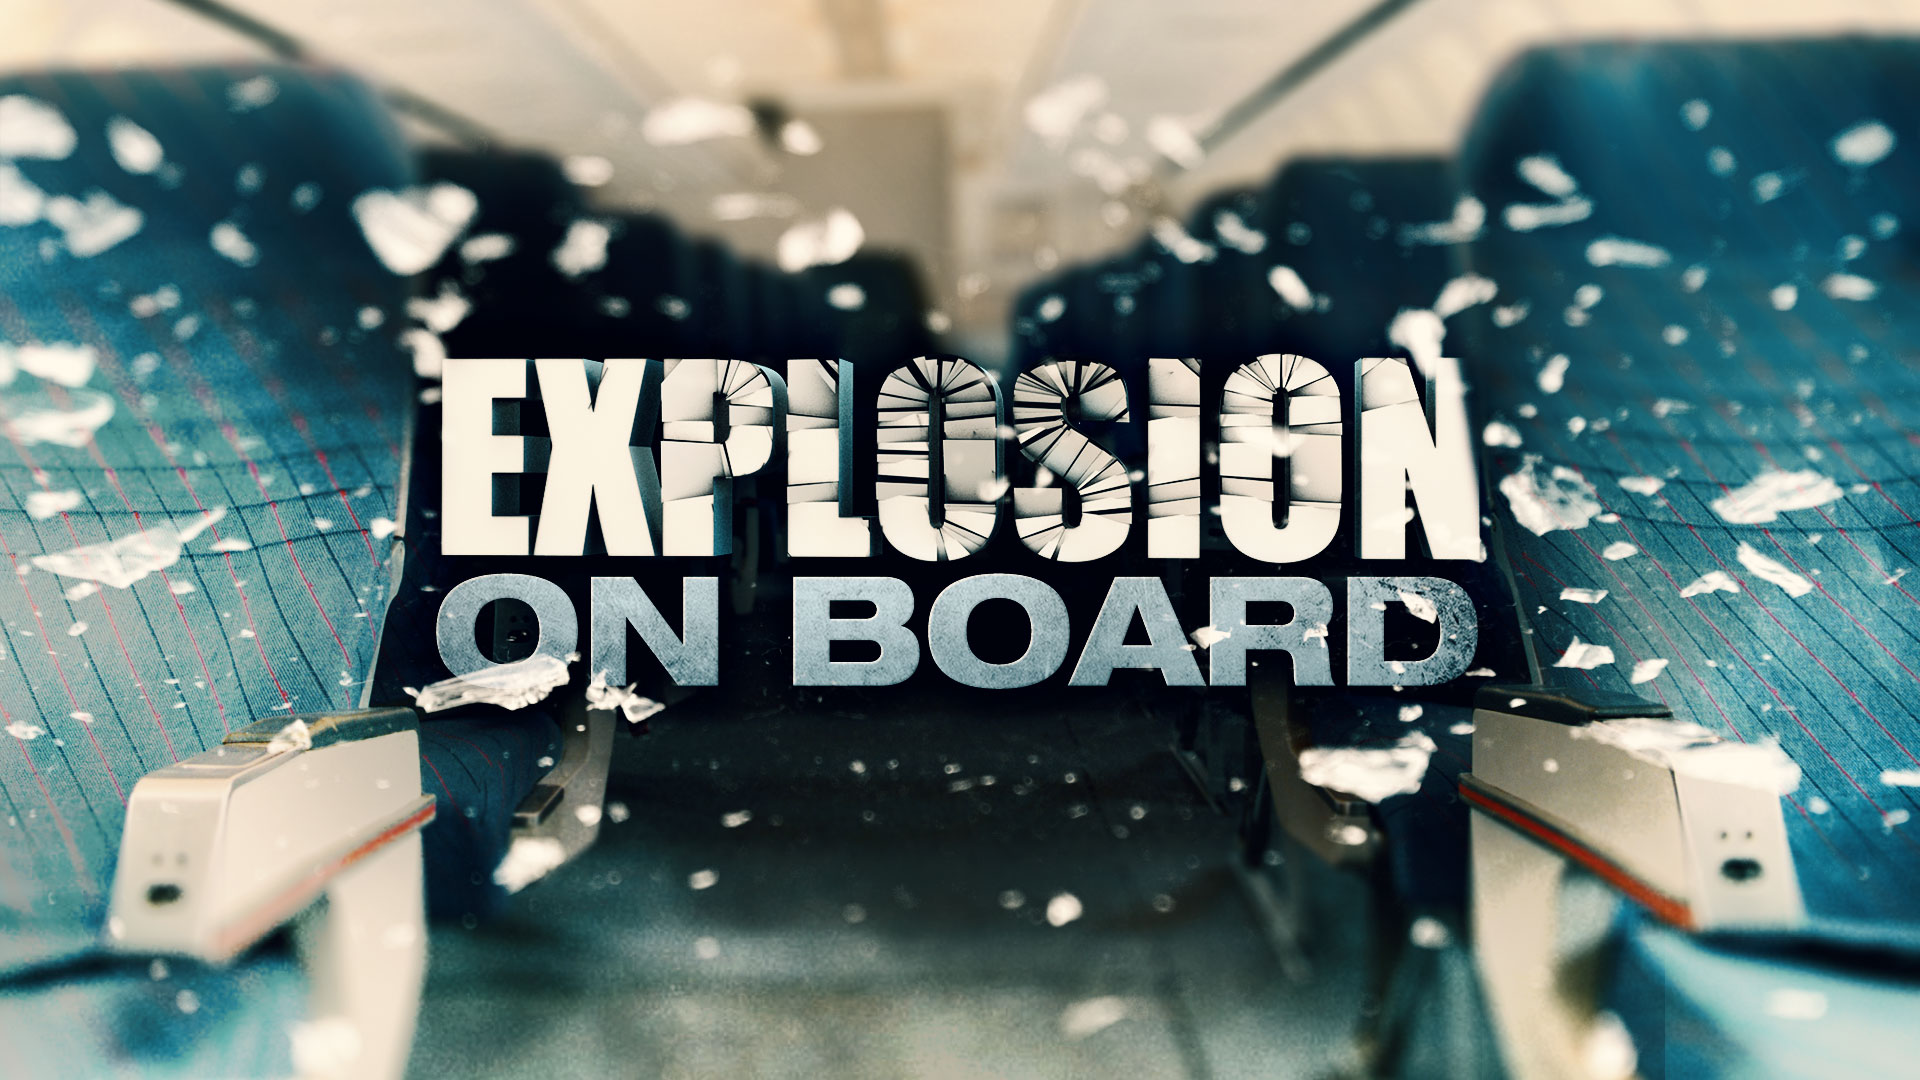 Somalia-Explosion-on-Board-020316-cc